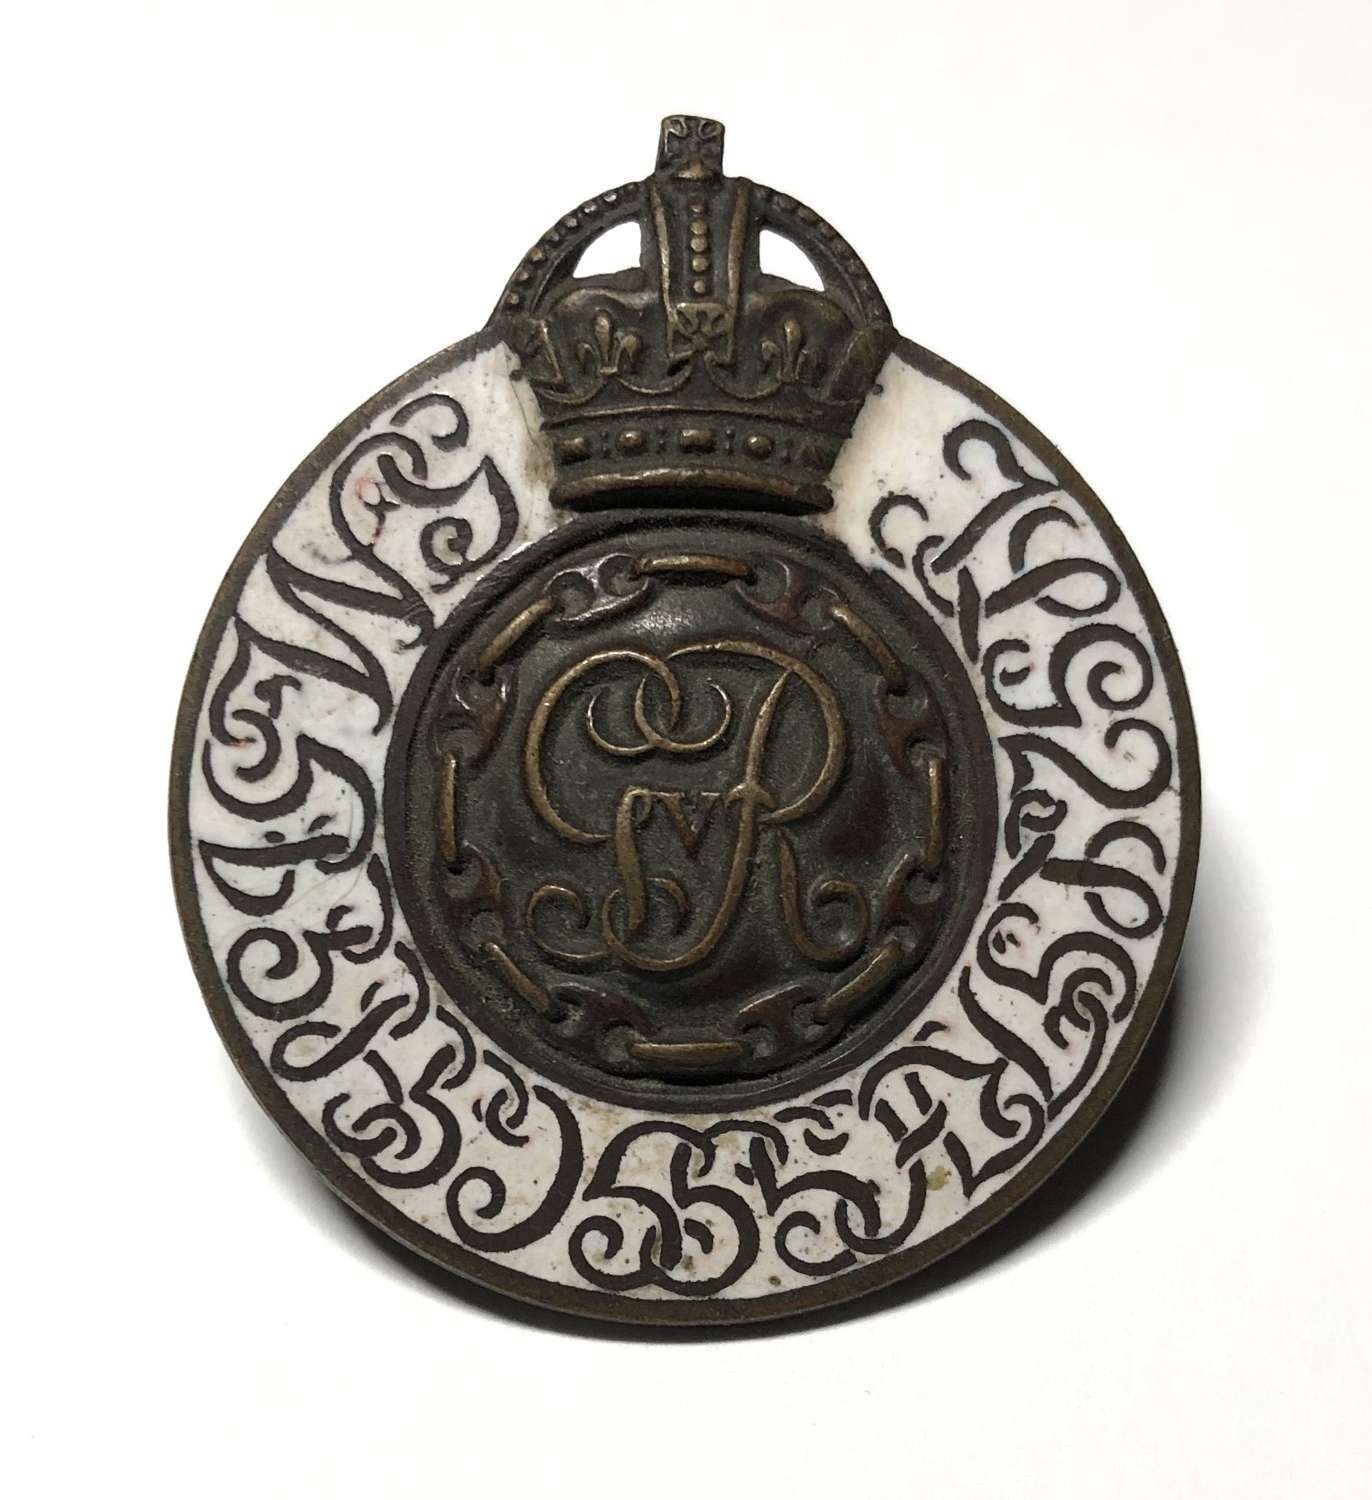 Household Brigade Officer Cadet Battalion WW1 cap badge